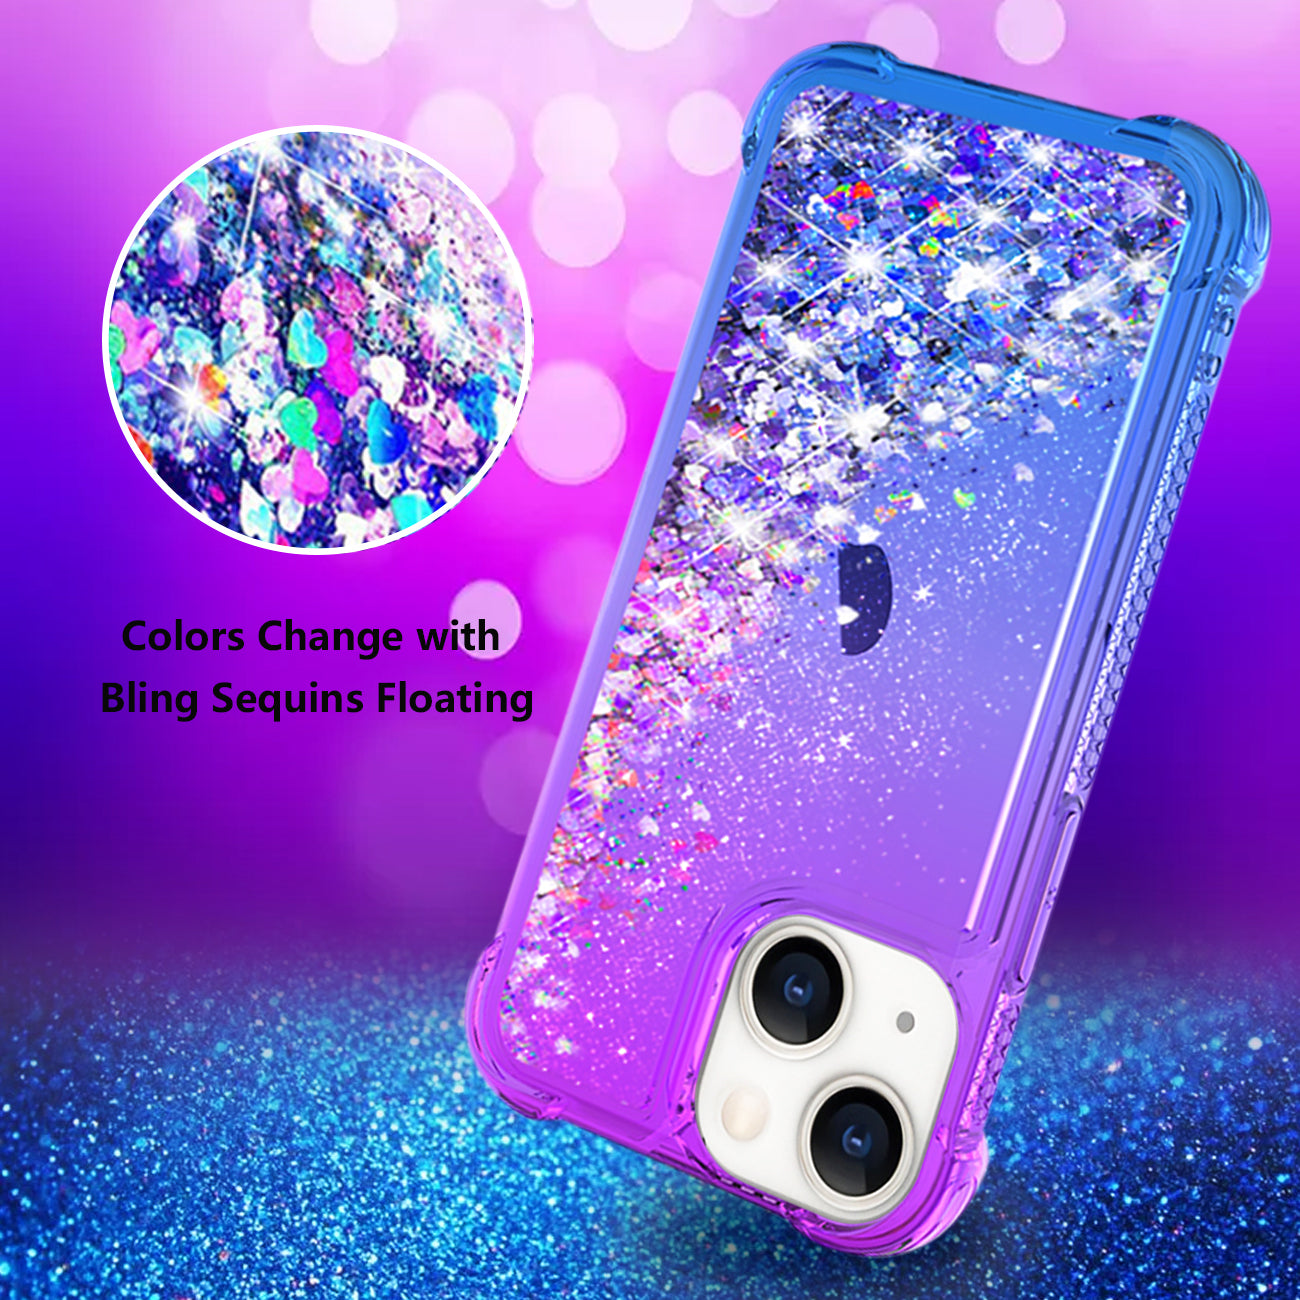 Shiny Flowing Glitter Liquid Bumper Case For APPLE IPHONE 13 MINI In Purple